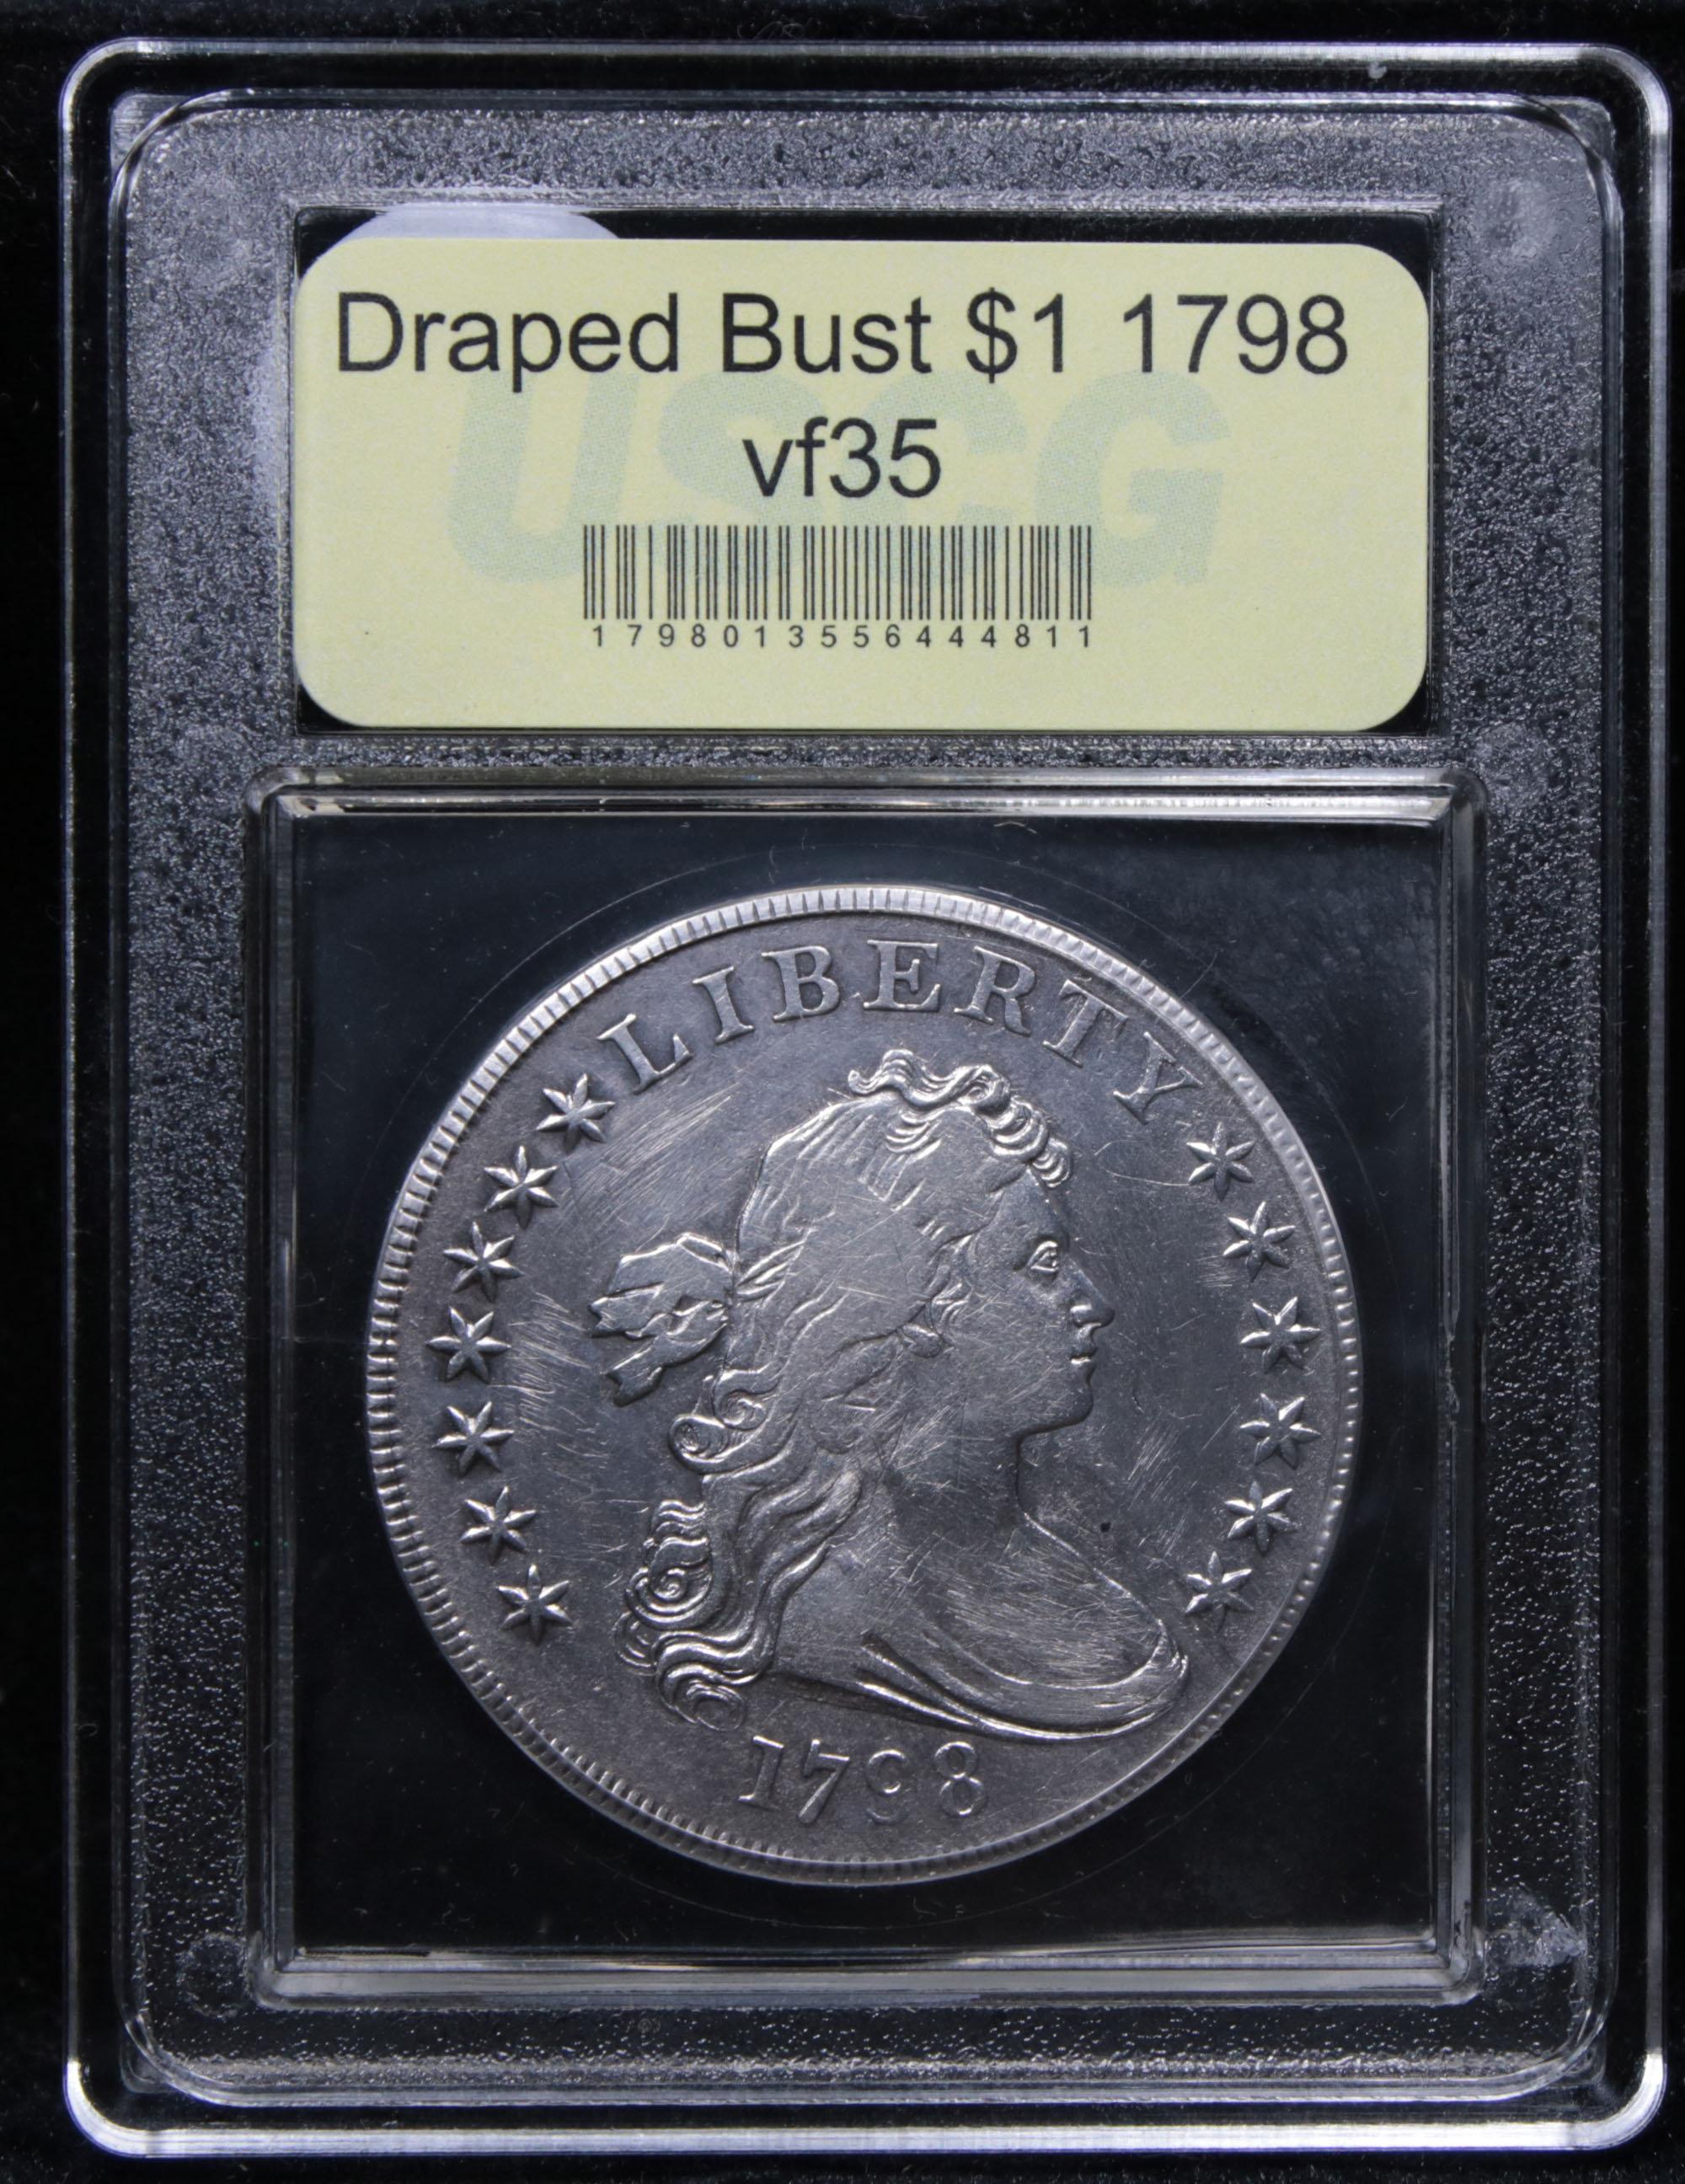 ***Auction Highlight*** 1798 Heraldic Eagle Draped Bust Dollar $1 Graded vf++ by USCG (fc)